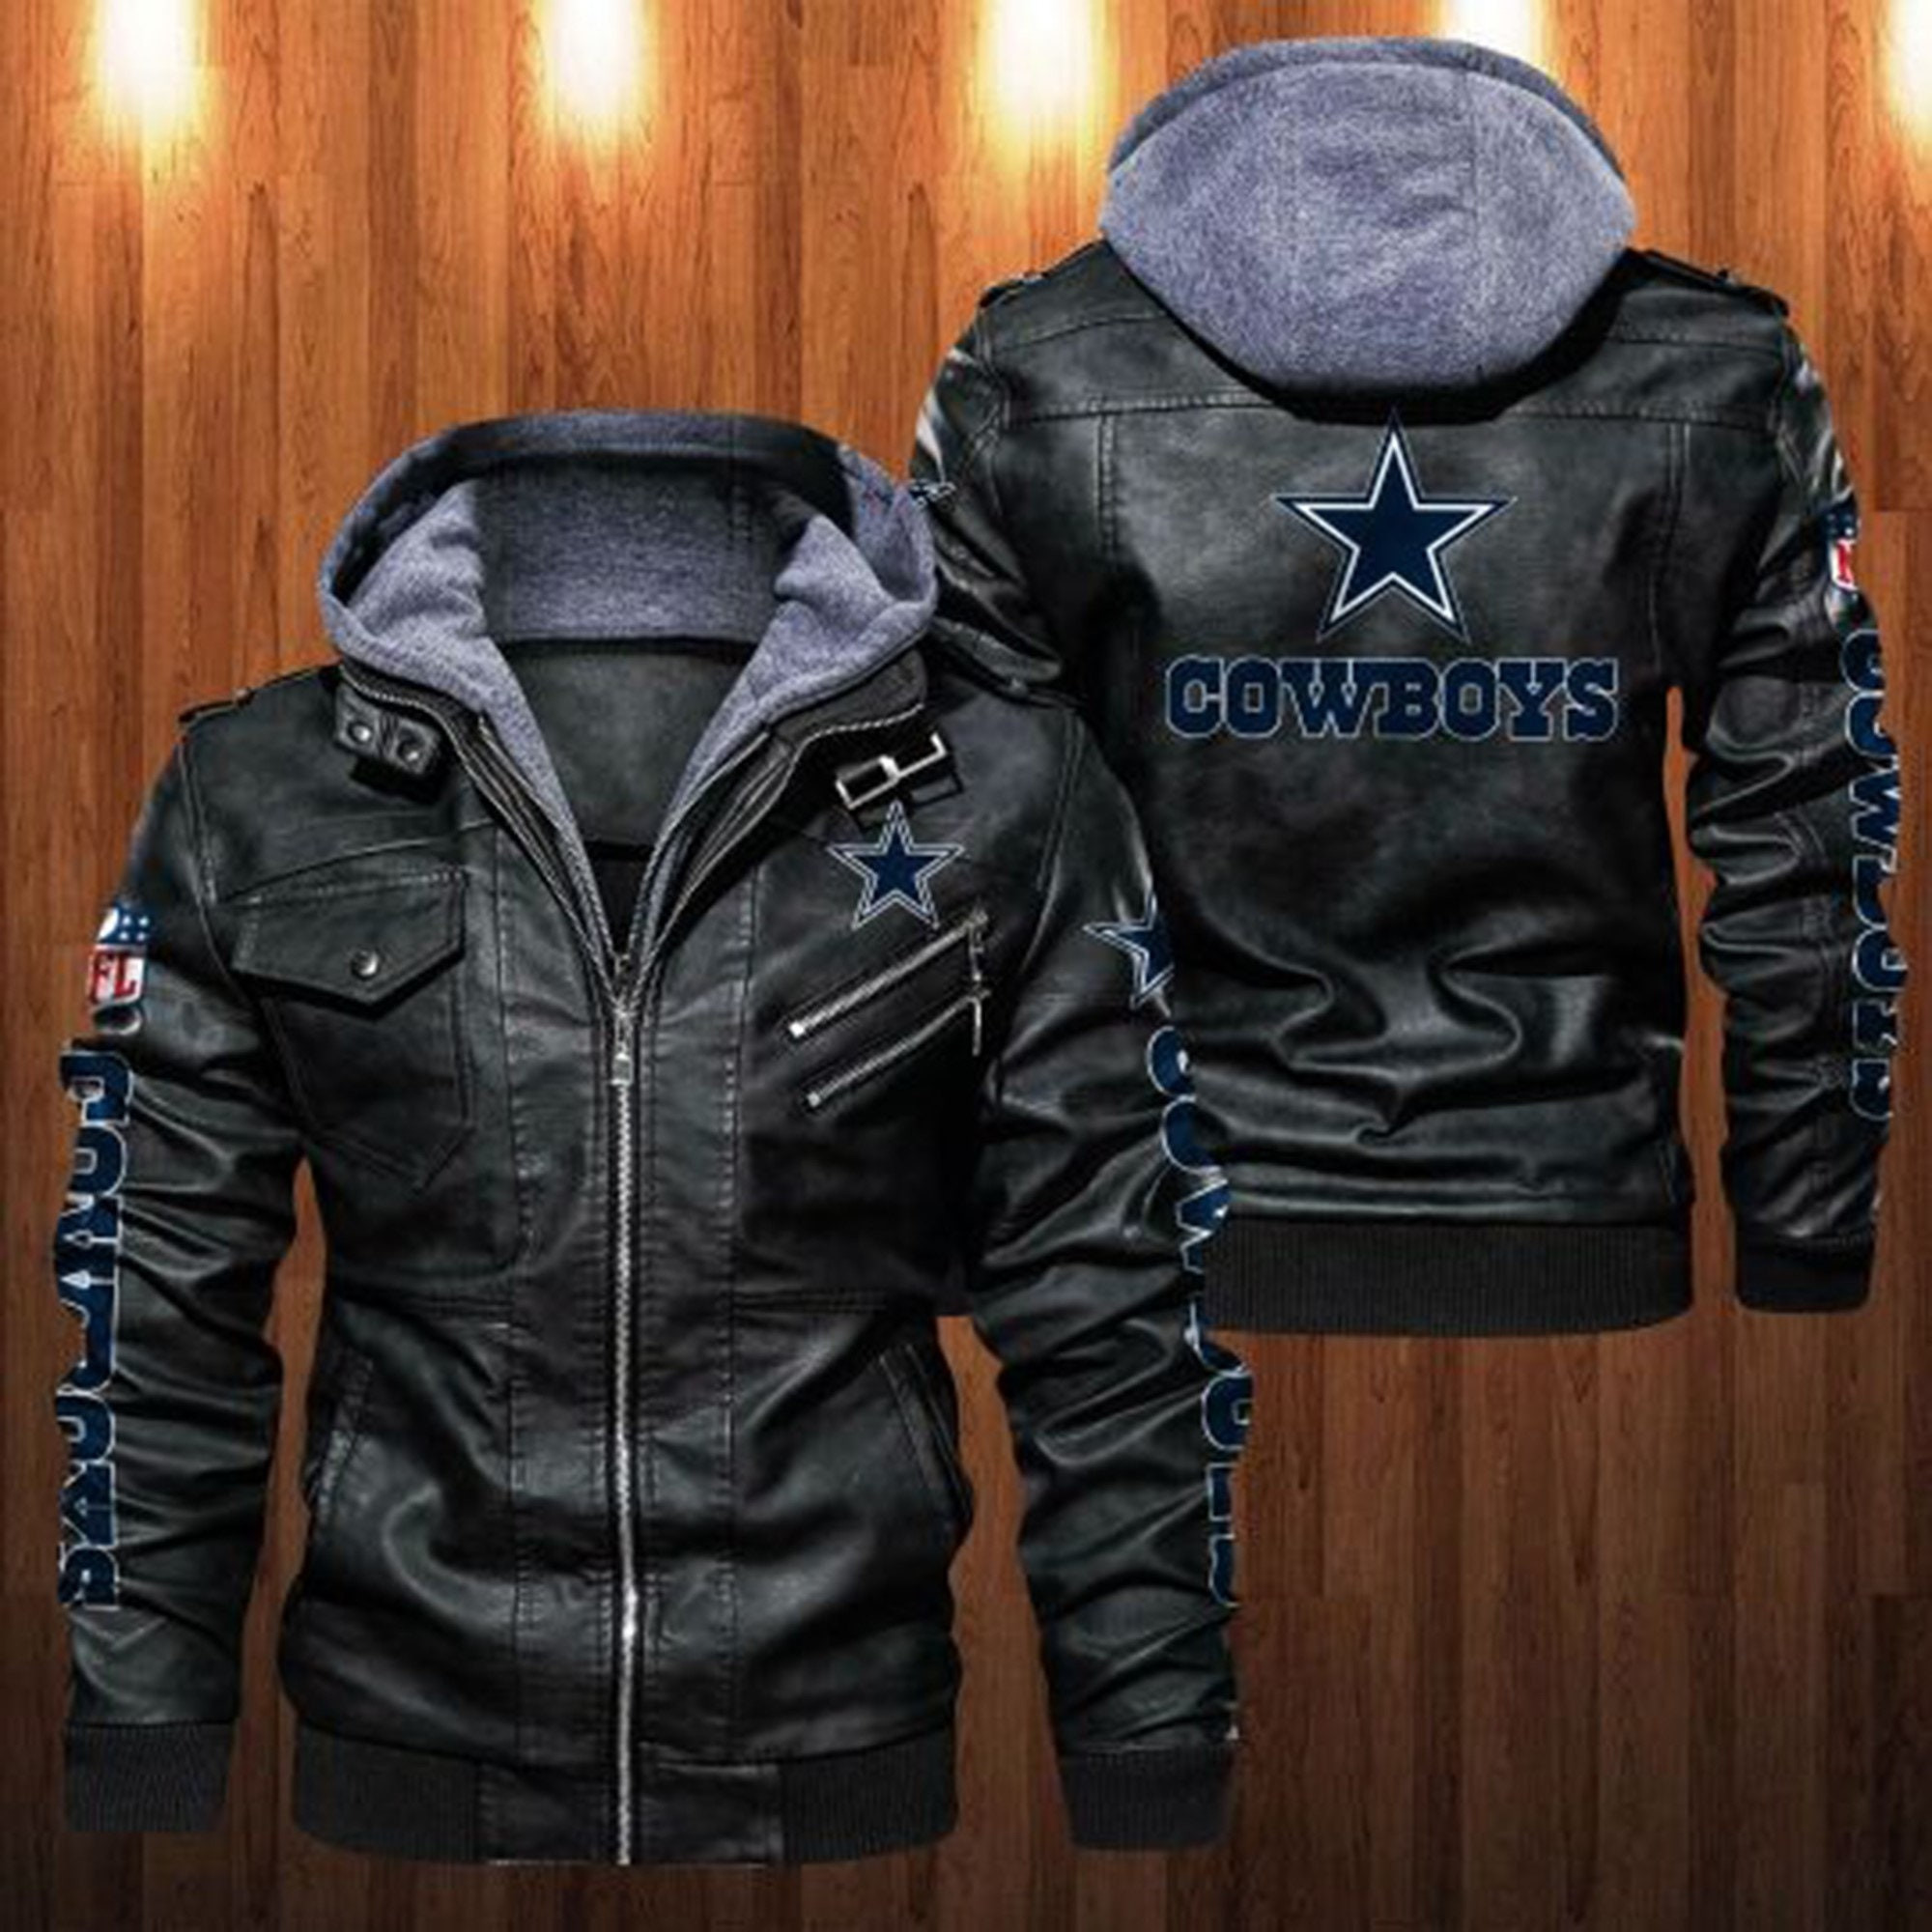 Choosing Leather Jacket that looks good on you below 46